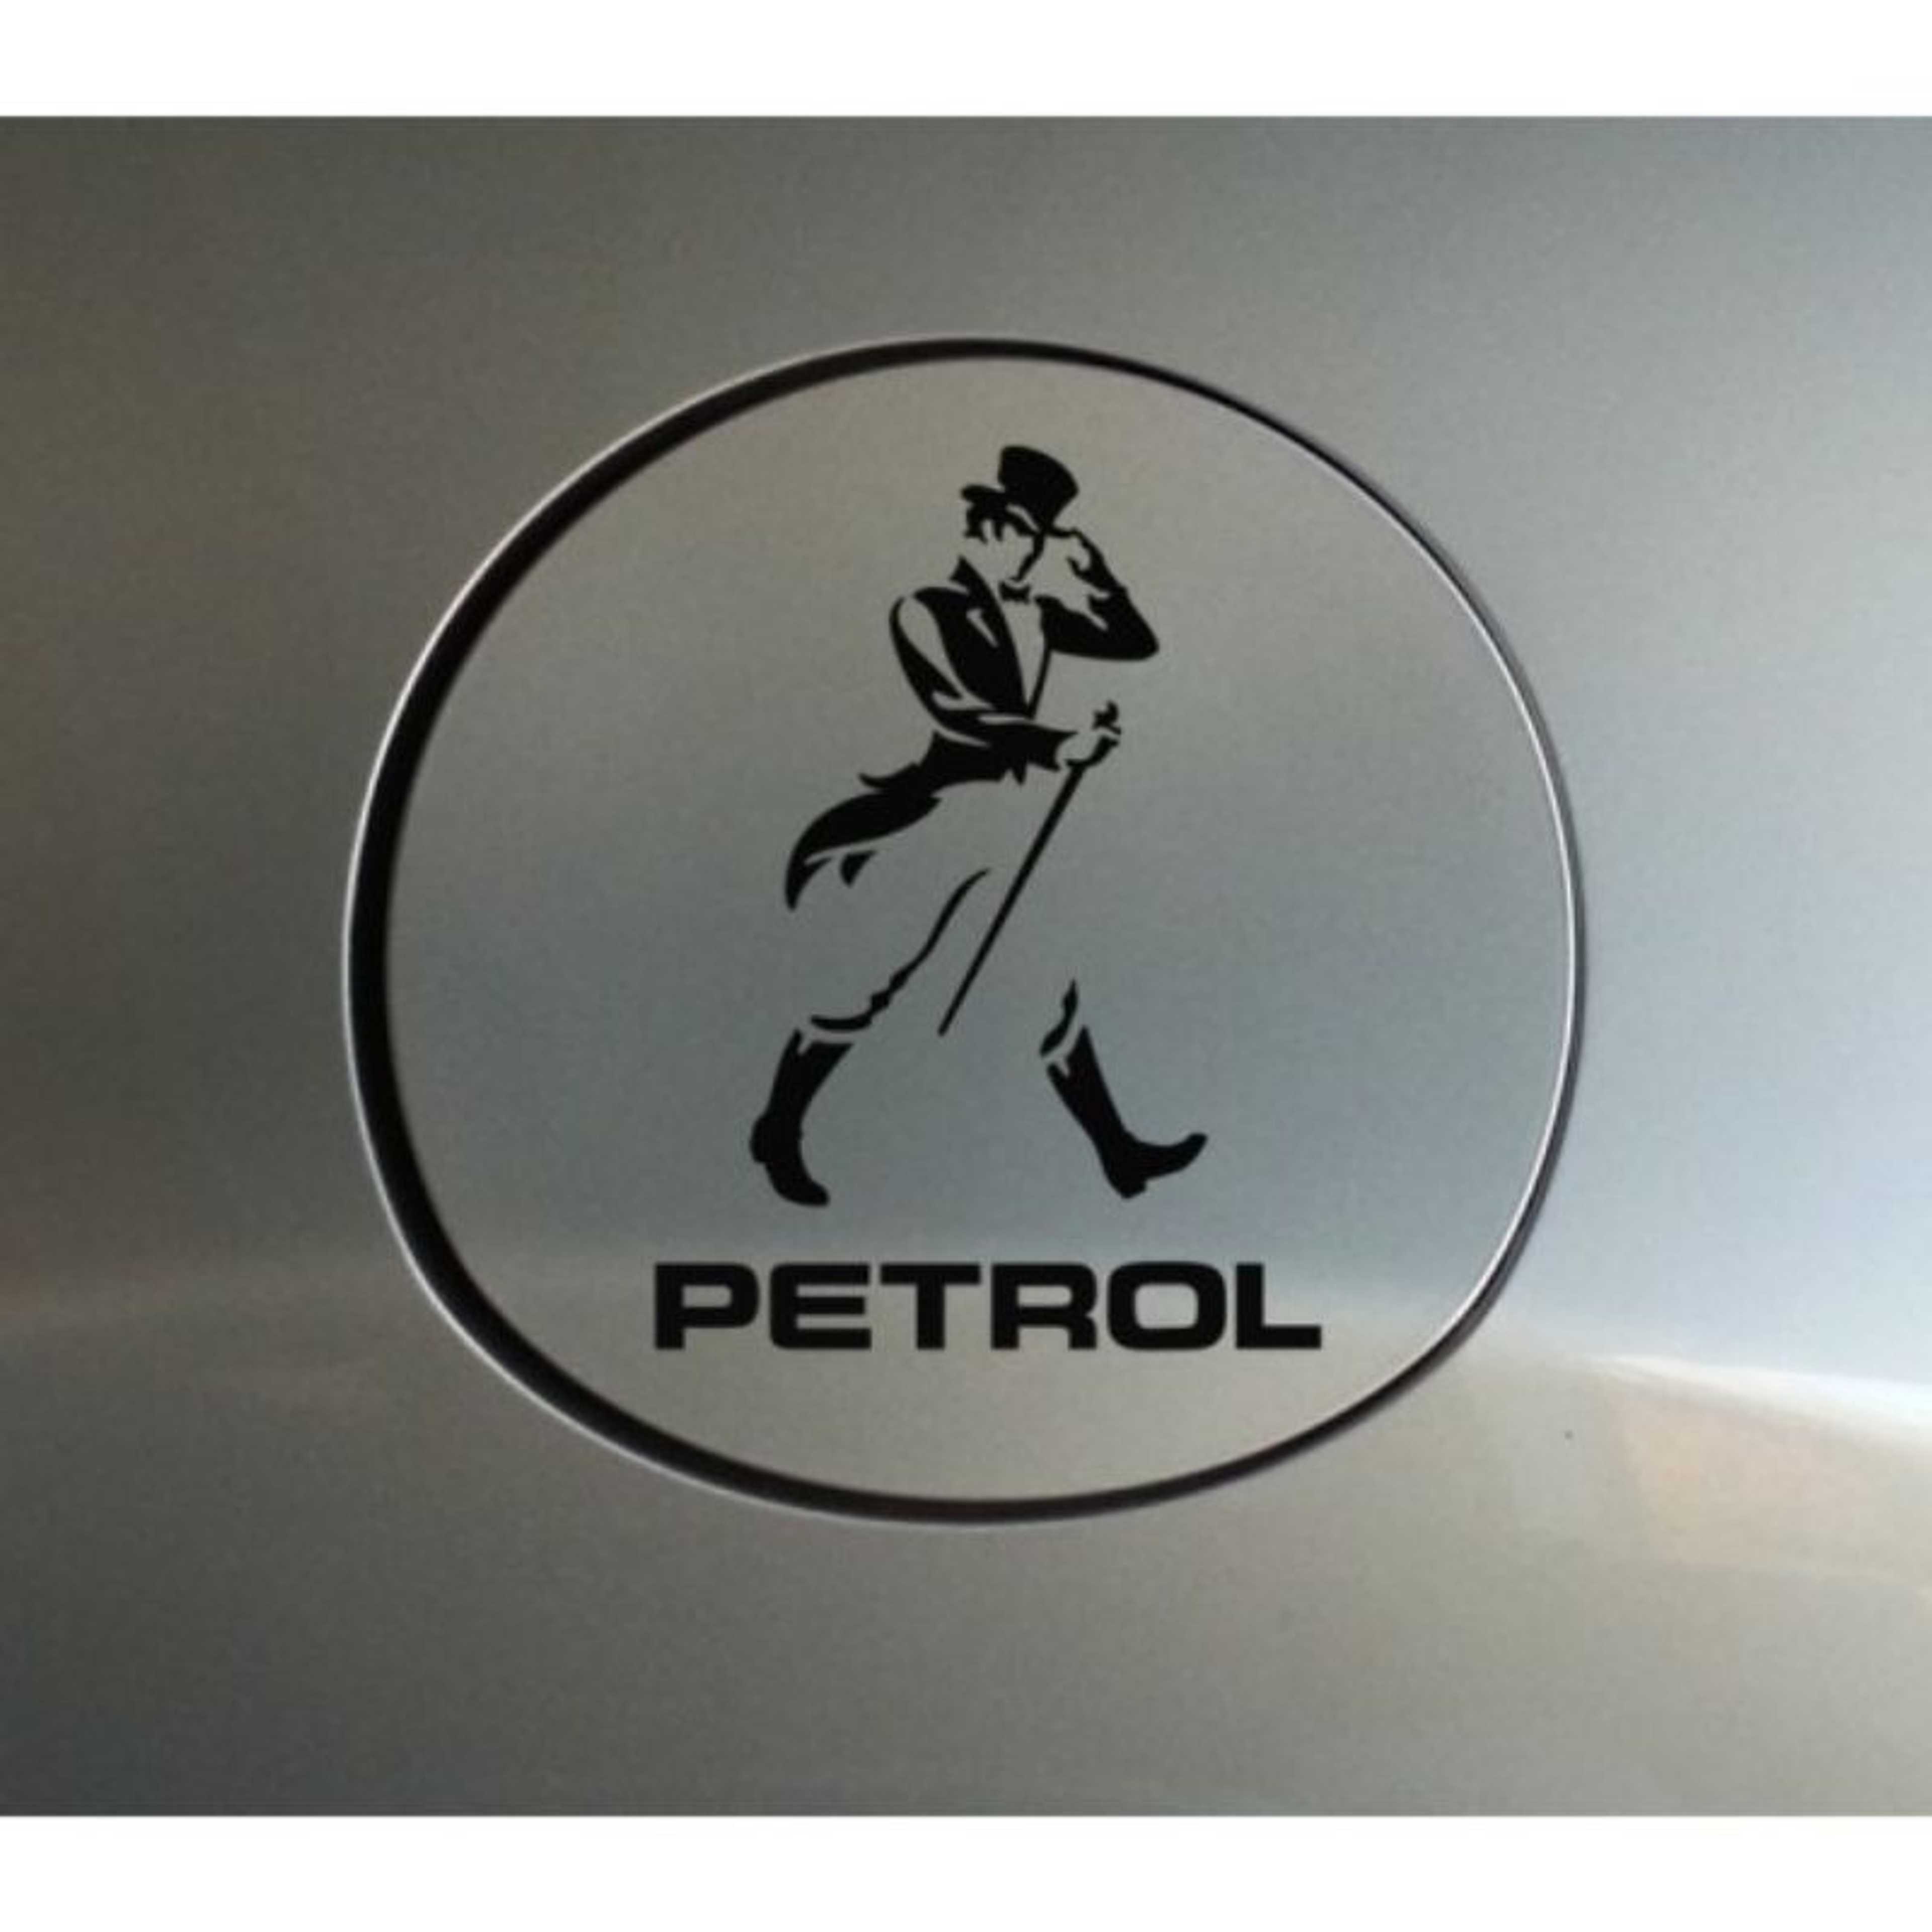 "Multi purpose sticker special for feul tank door for cars petrol tank sticker "